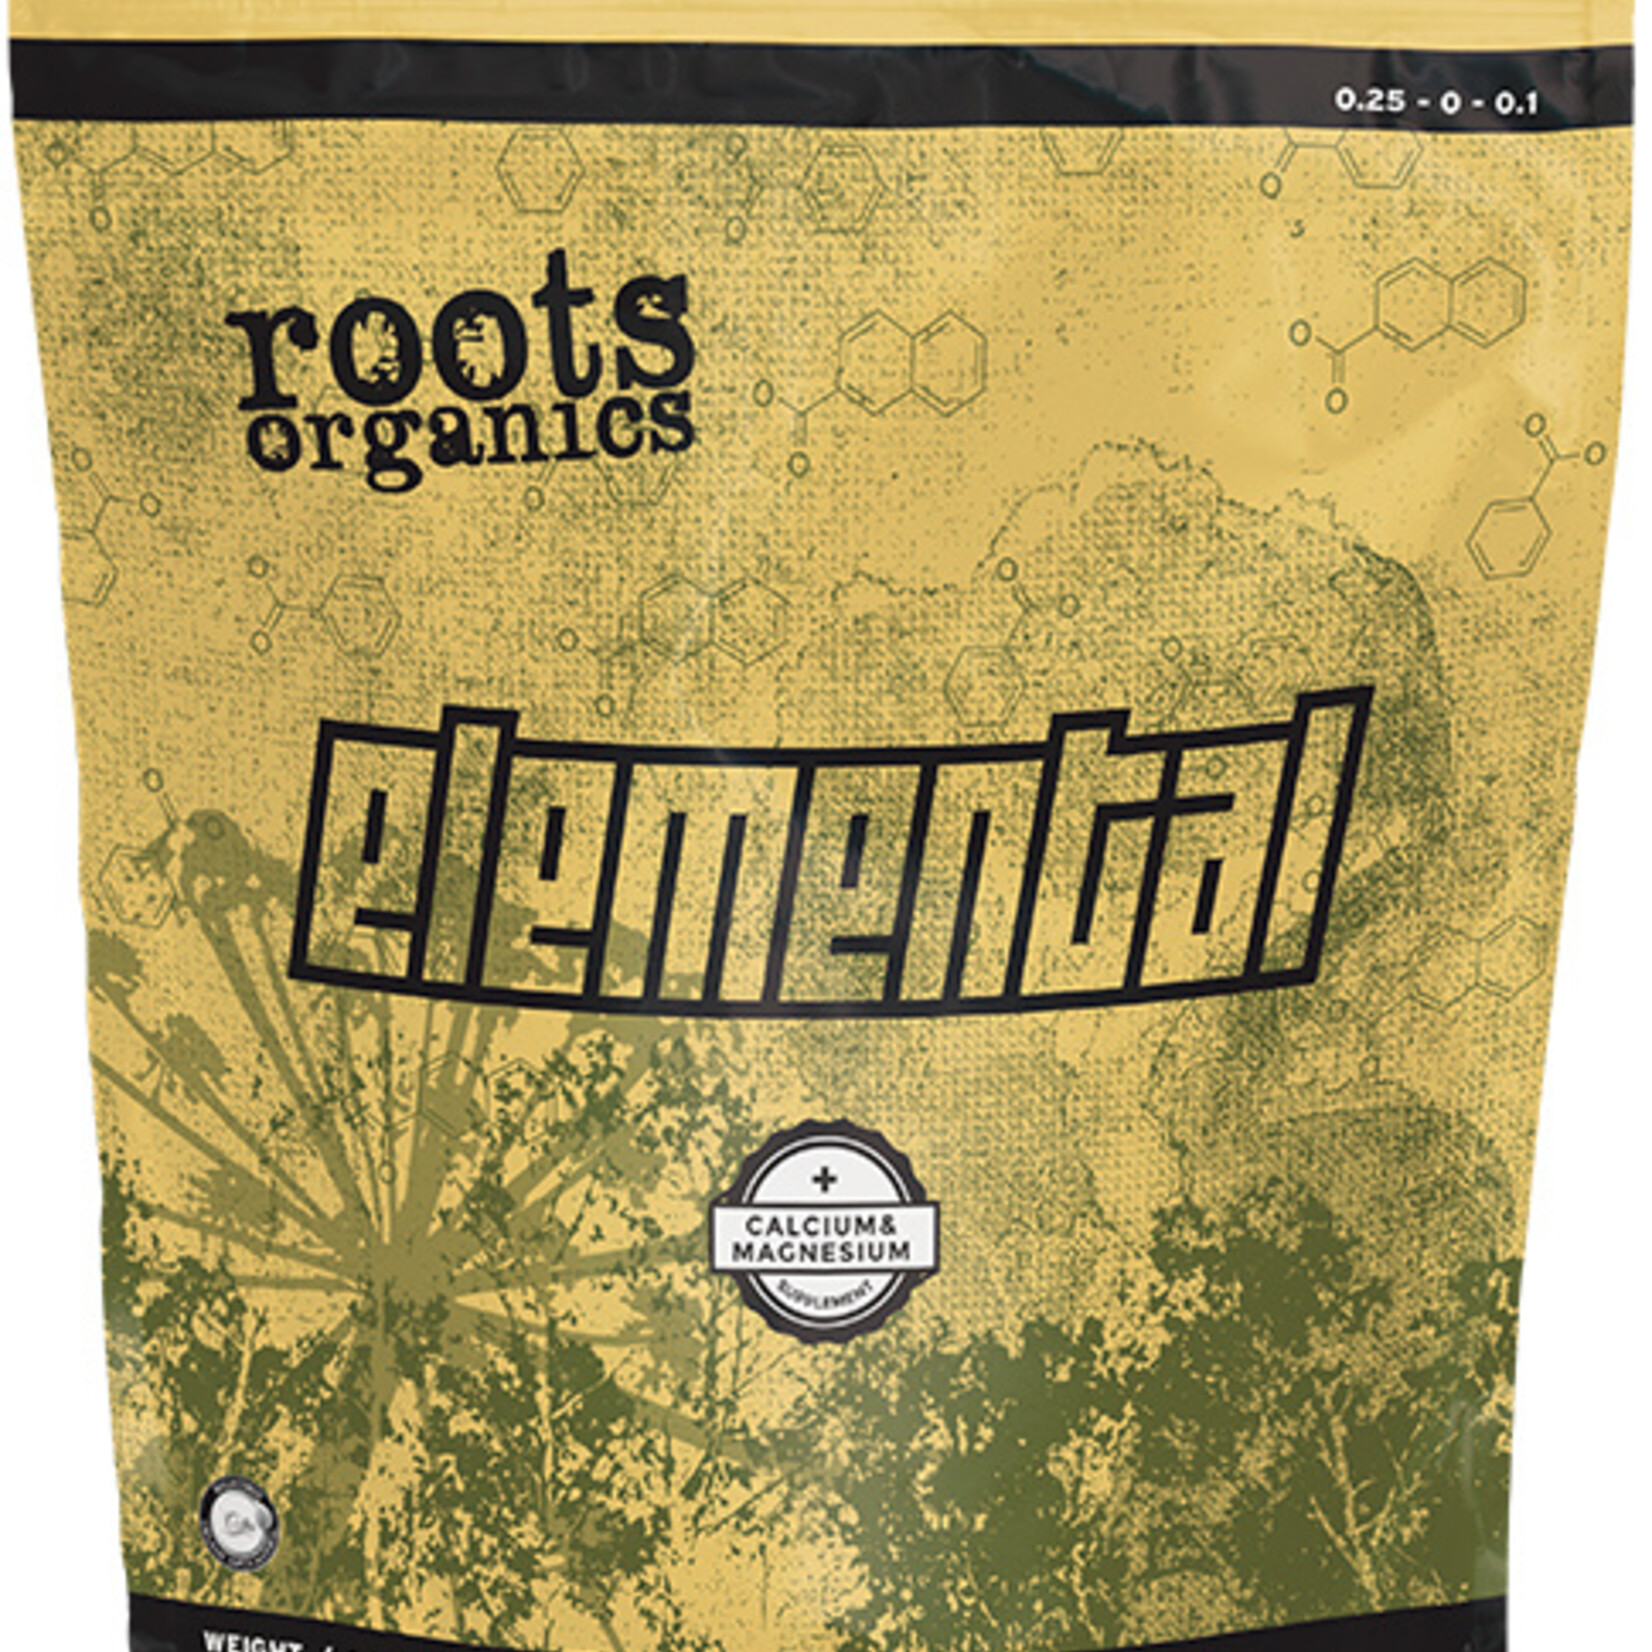 Roots Organics Roots Organics Elemental 3lbs